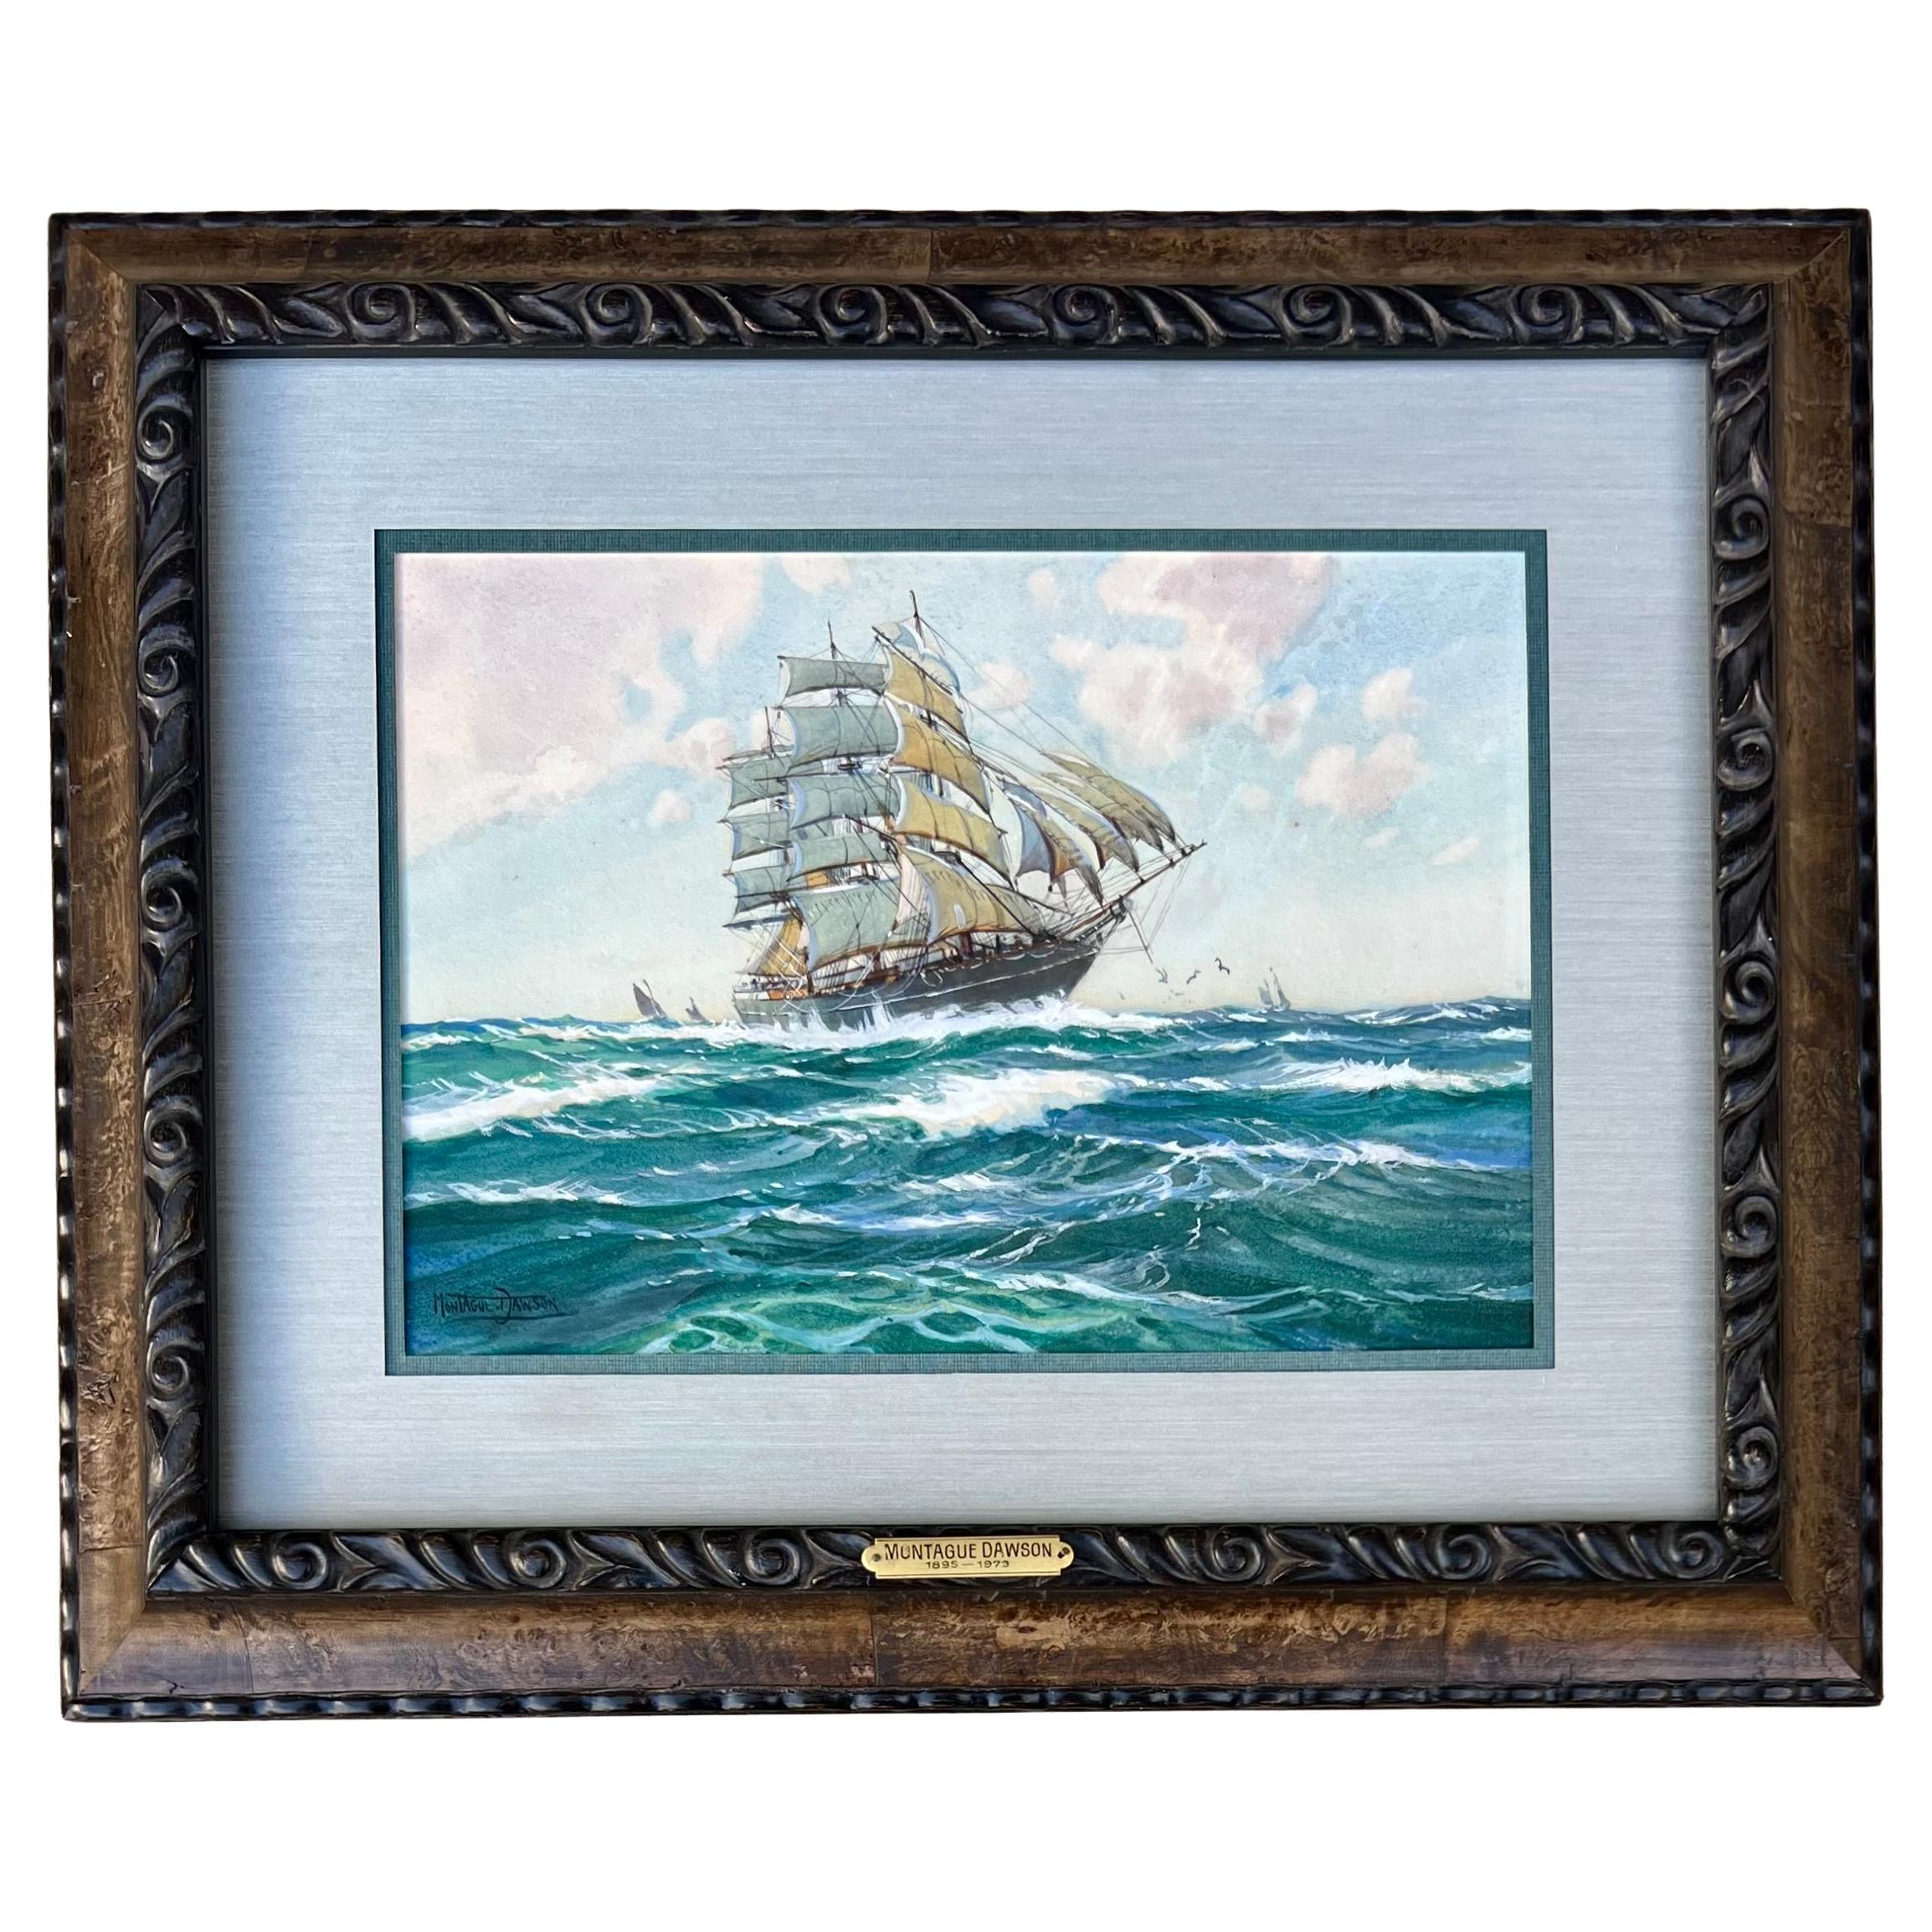 "At Full Sail" A Clipper Ship Watercolor by Montague Dawson